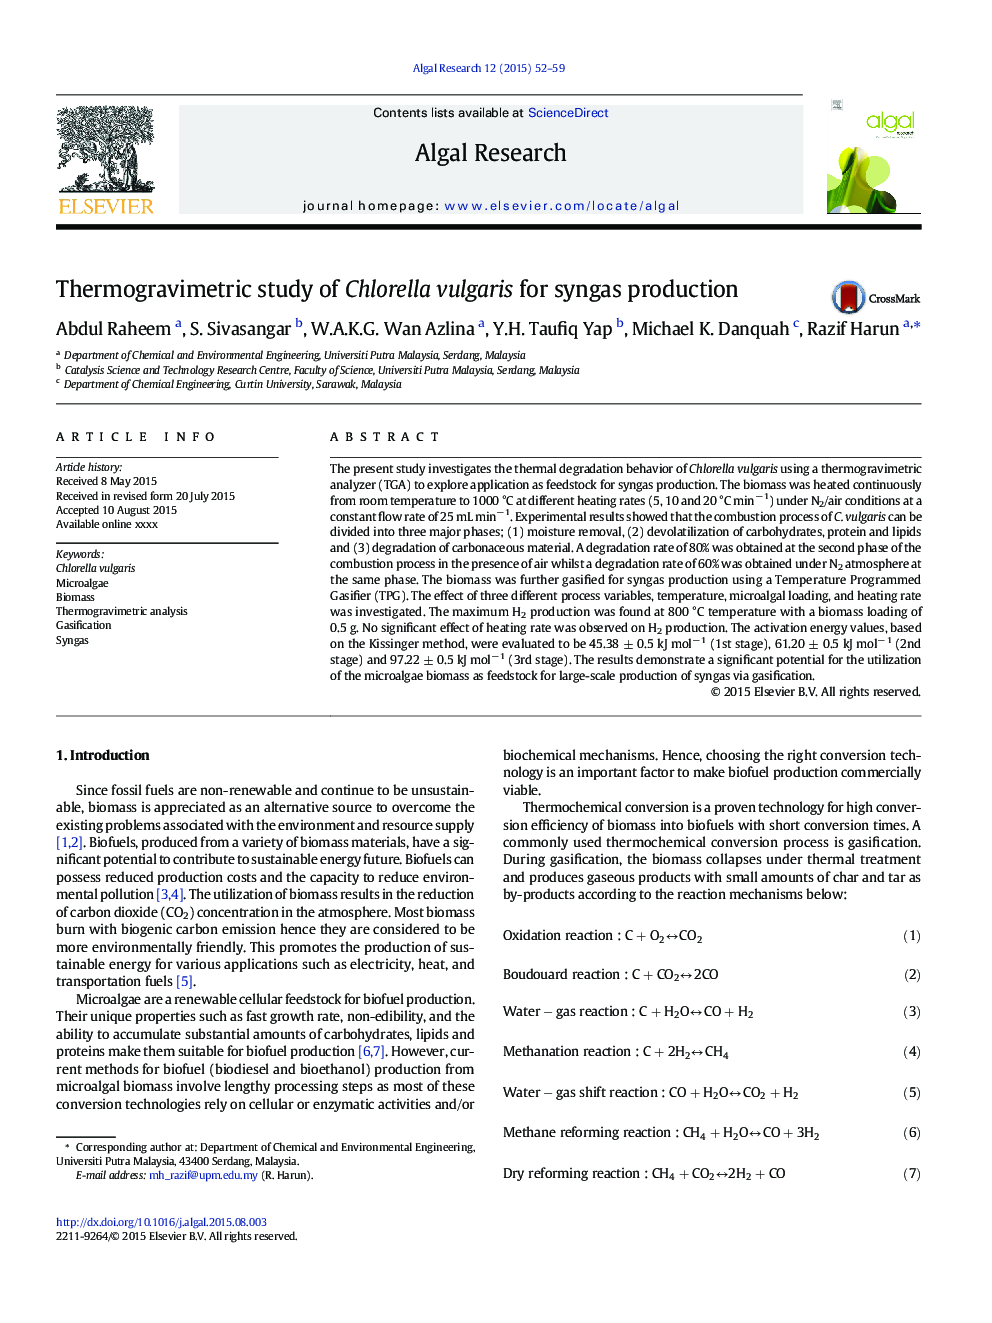 Thermogravimetric study of Chlorella vulgaris for syngas production